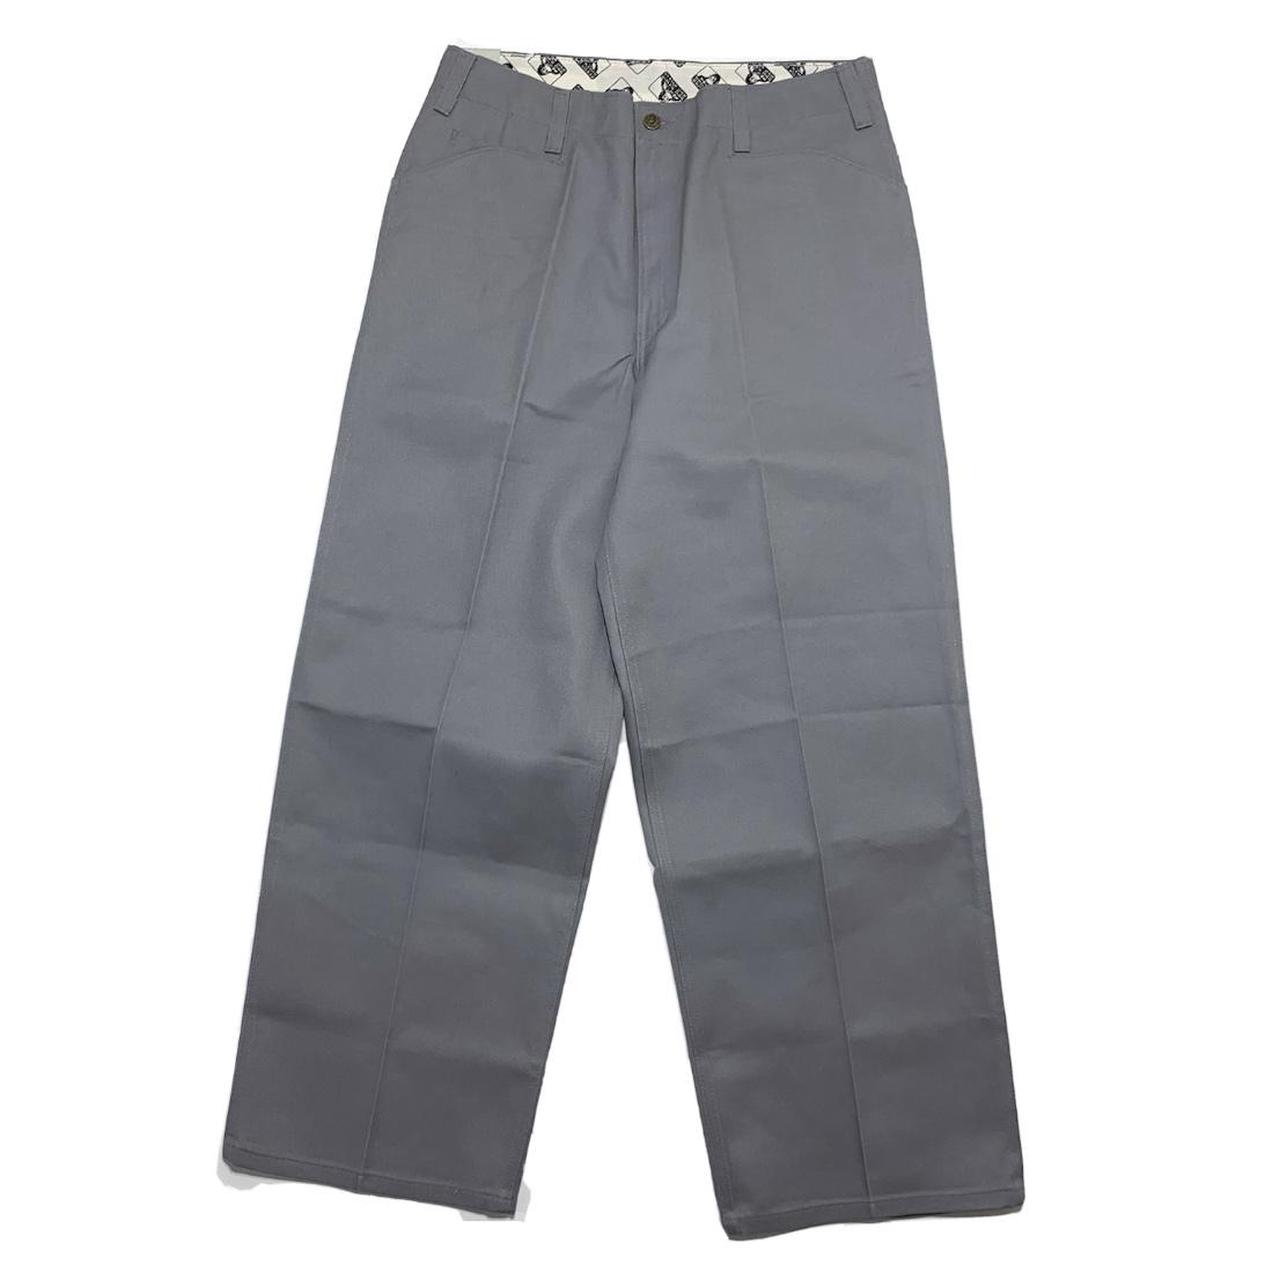 Ben Davis Gorilla Cut Gray Pants Mens Size 36 x 32 NWT - Depop